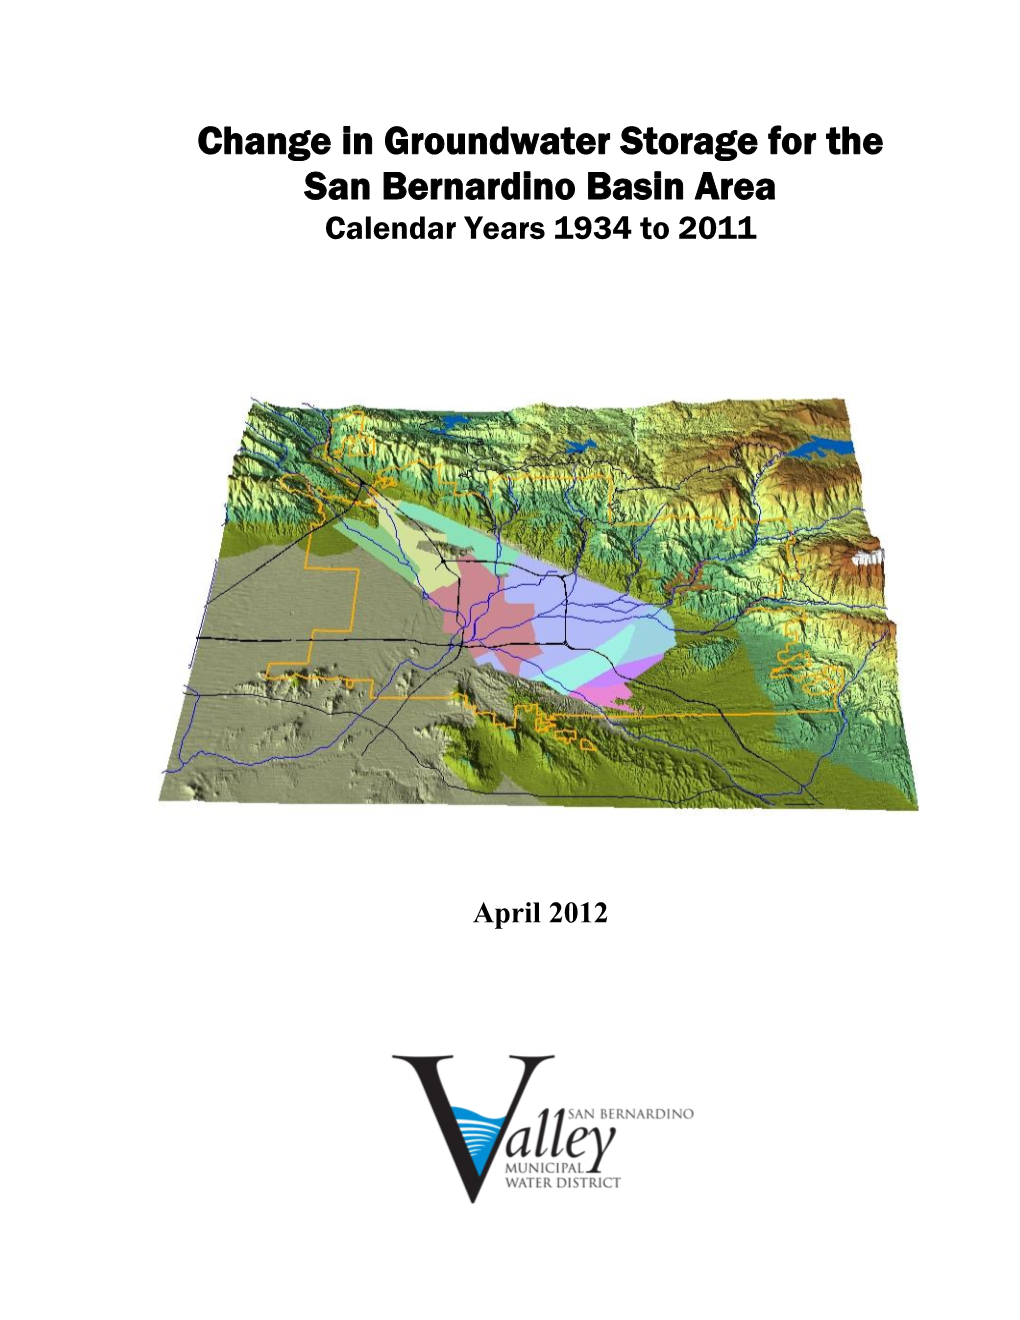 Change in Groundwater Storage for the San Bernardino Basin Area Calendar Years 1934 to 2011